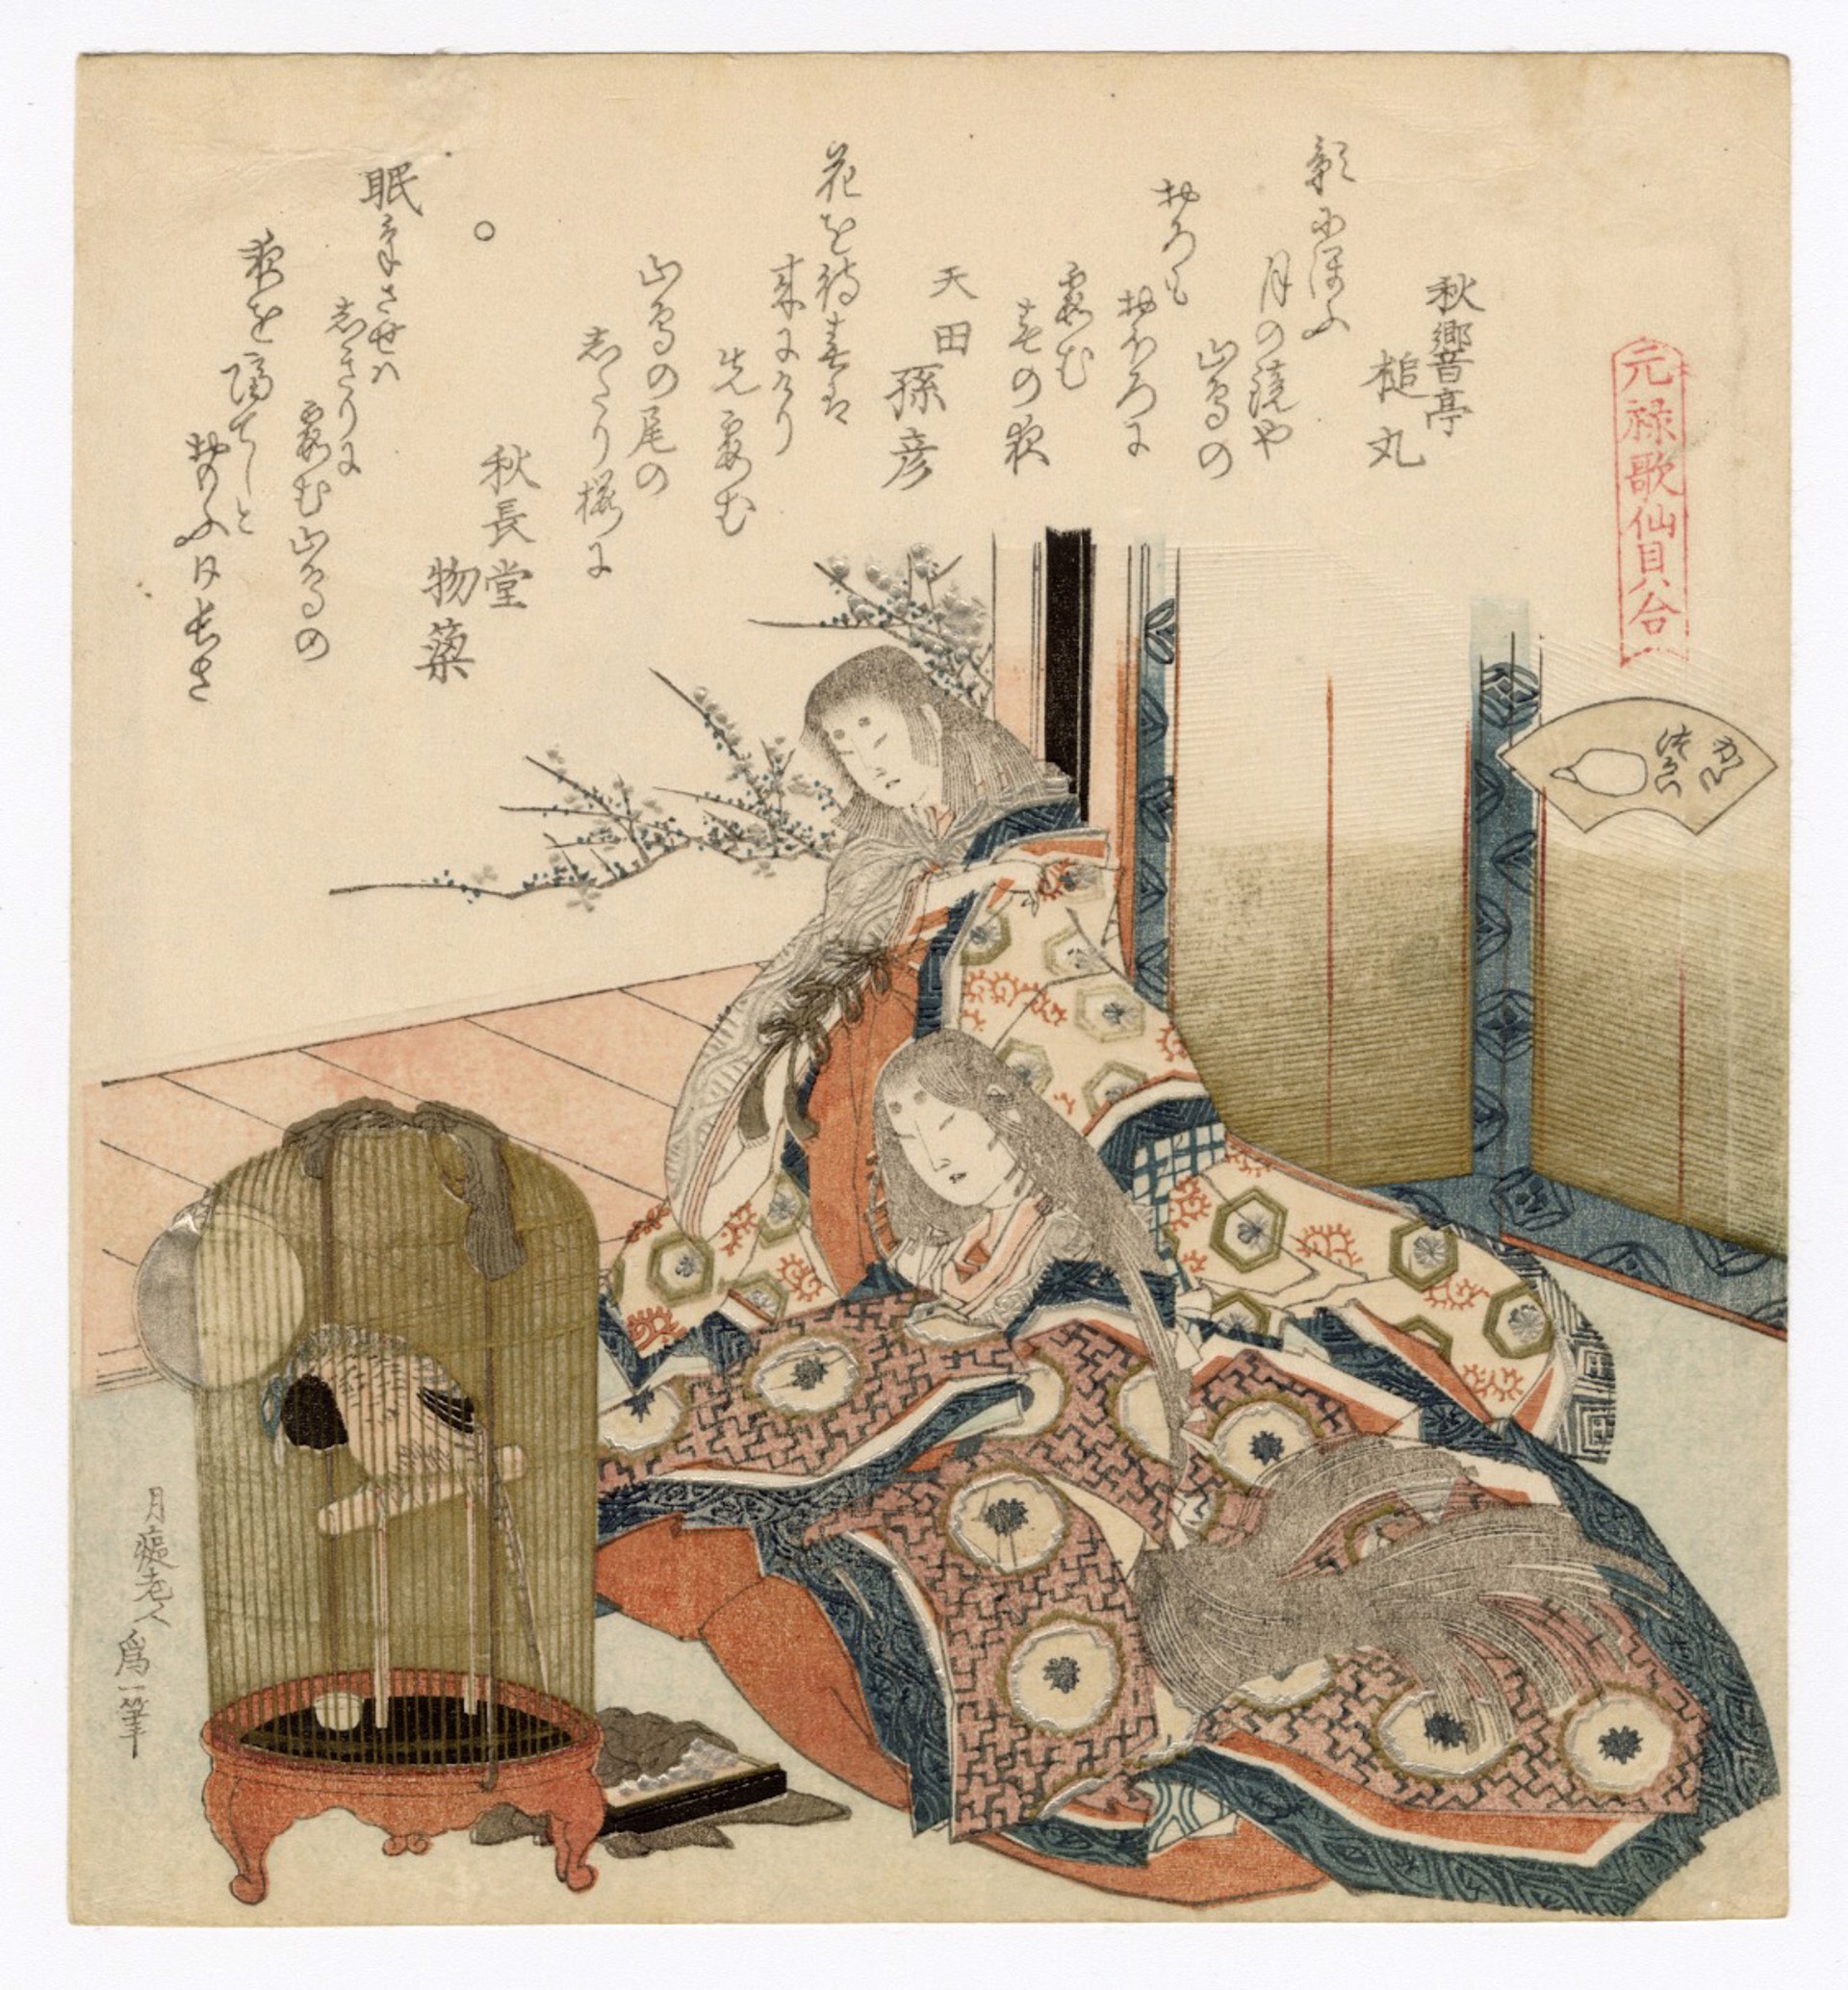 The Univalve Shell (Katatsugai) by Hokusai